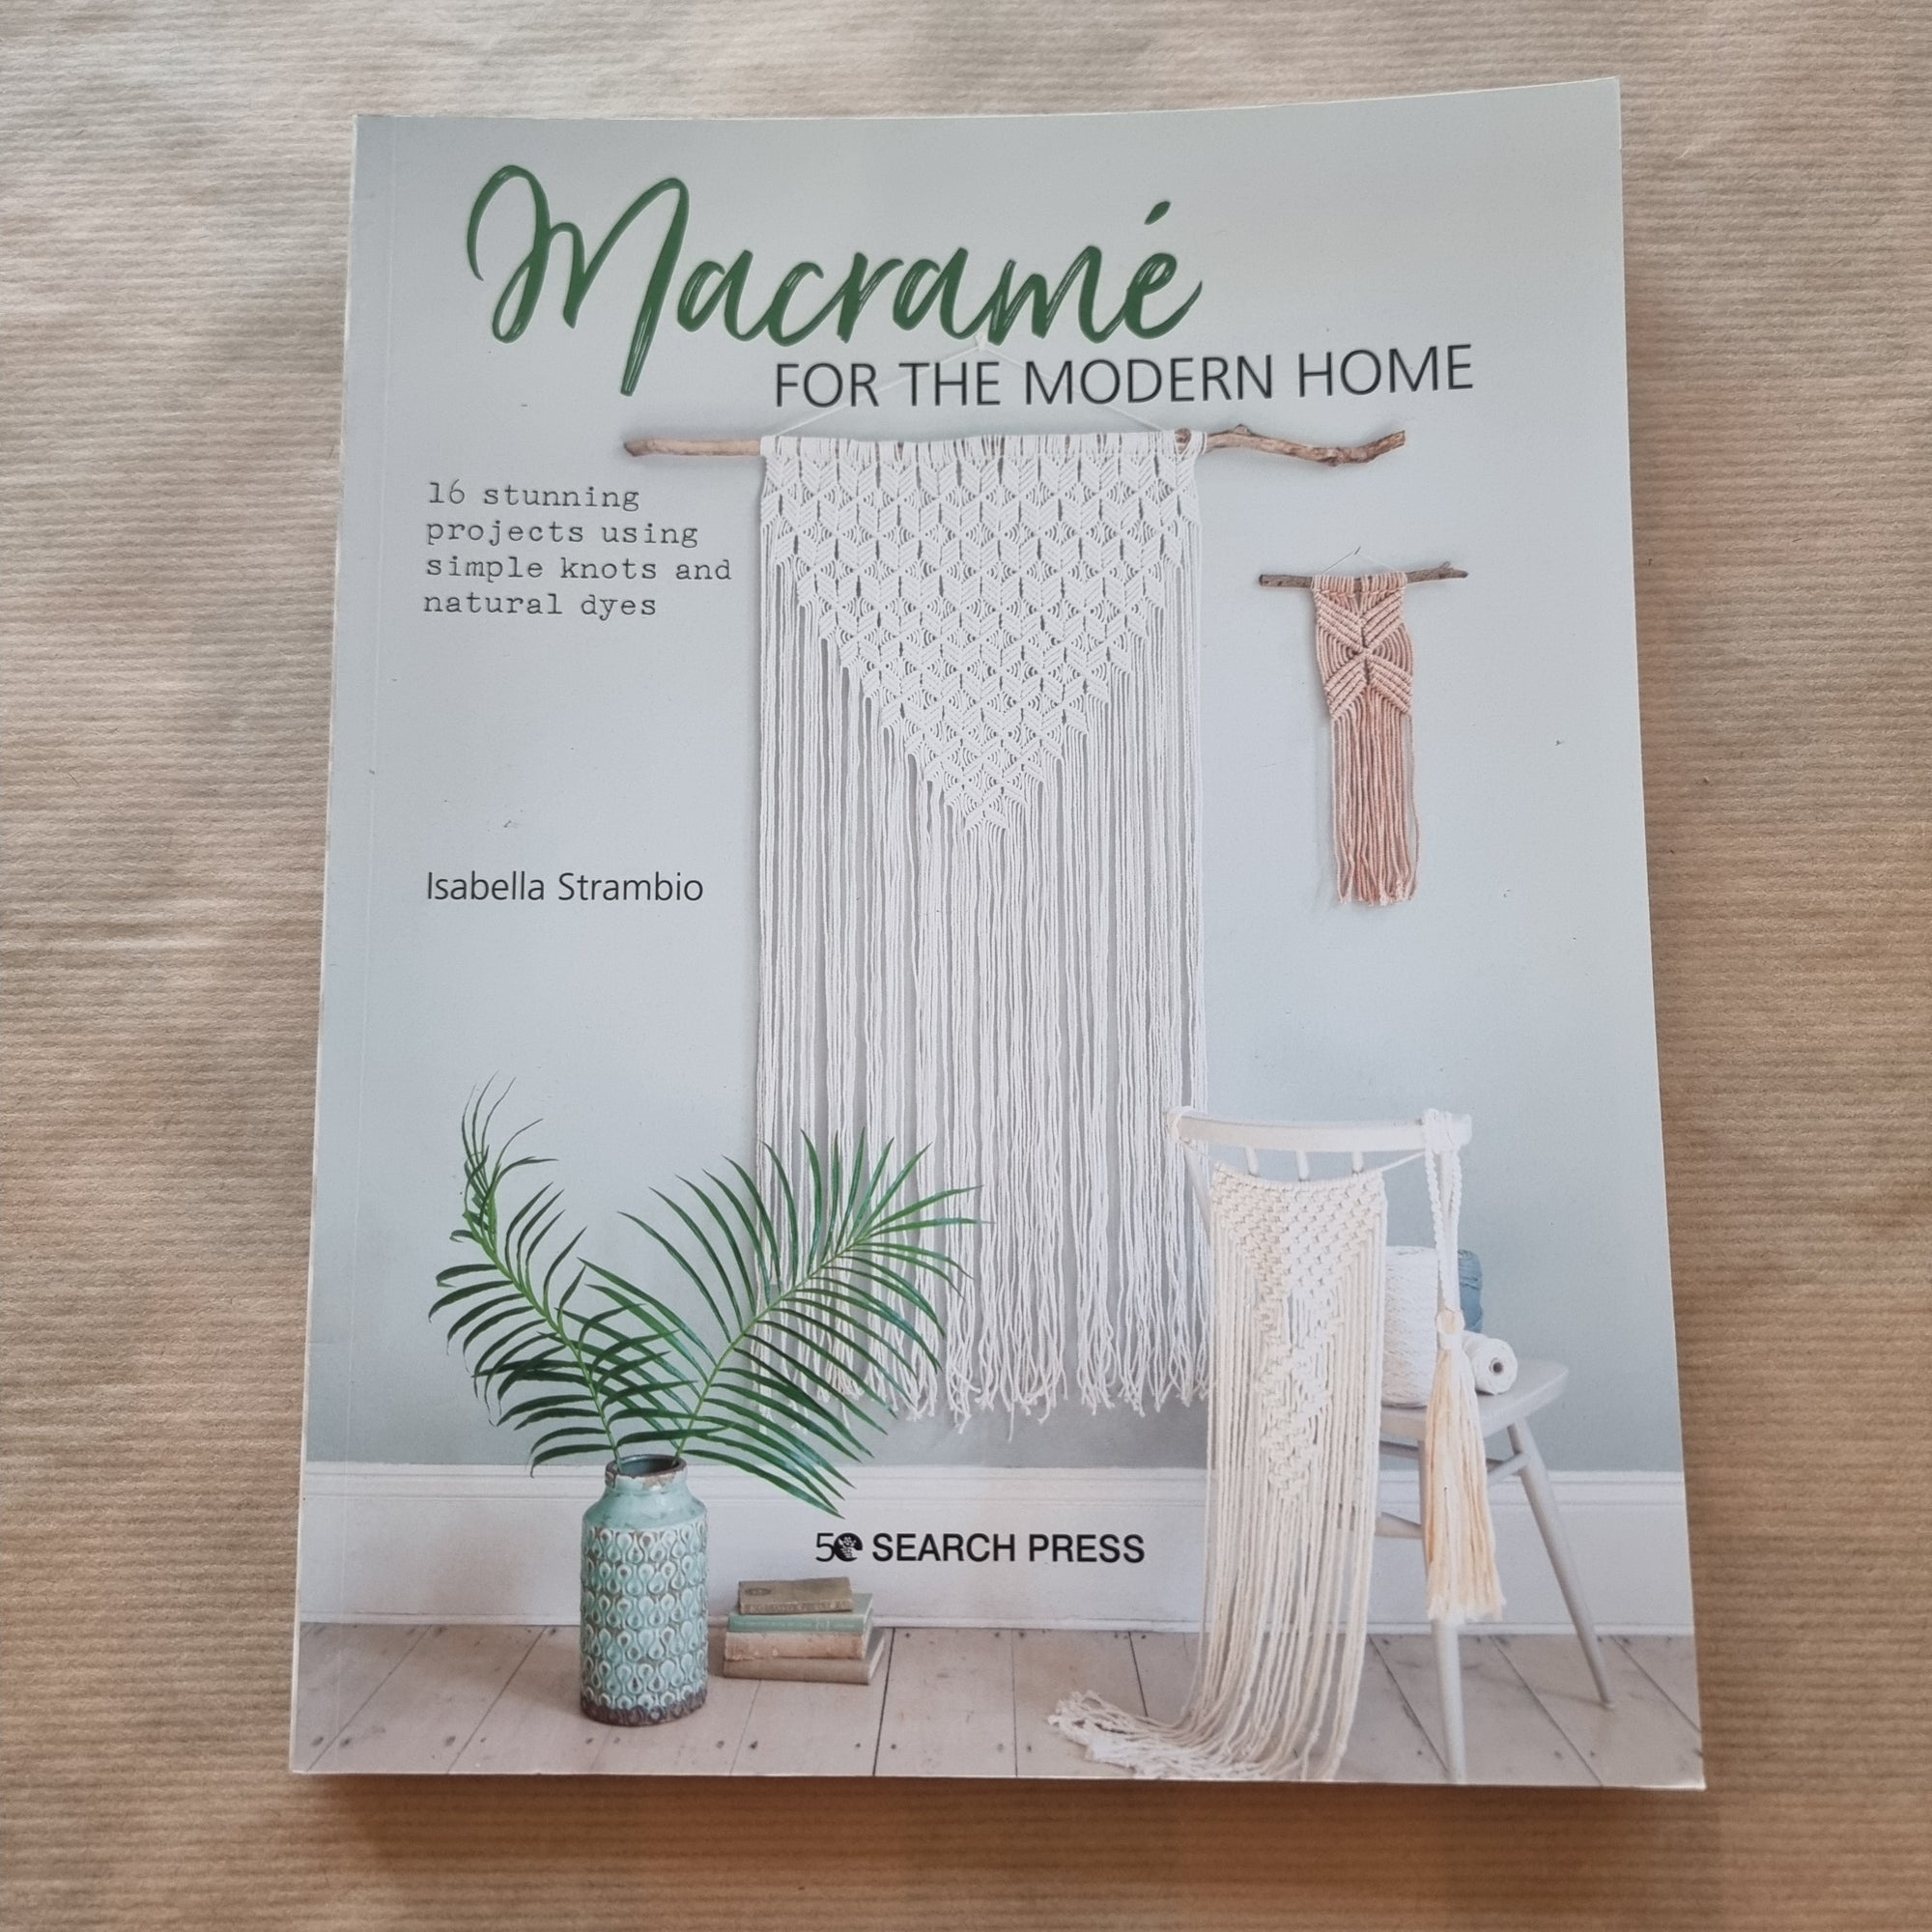 Macramé for the Modern Home